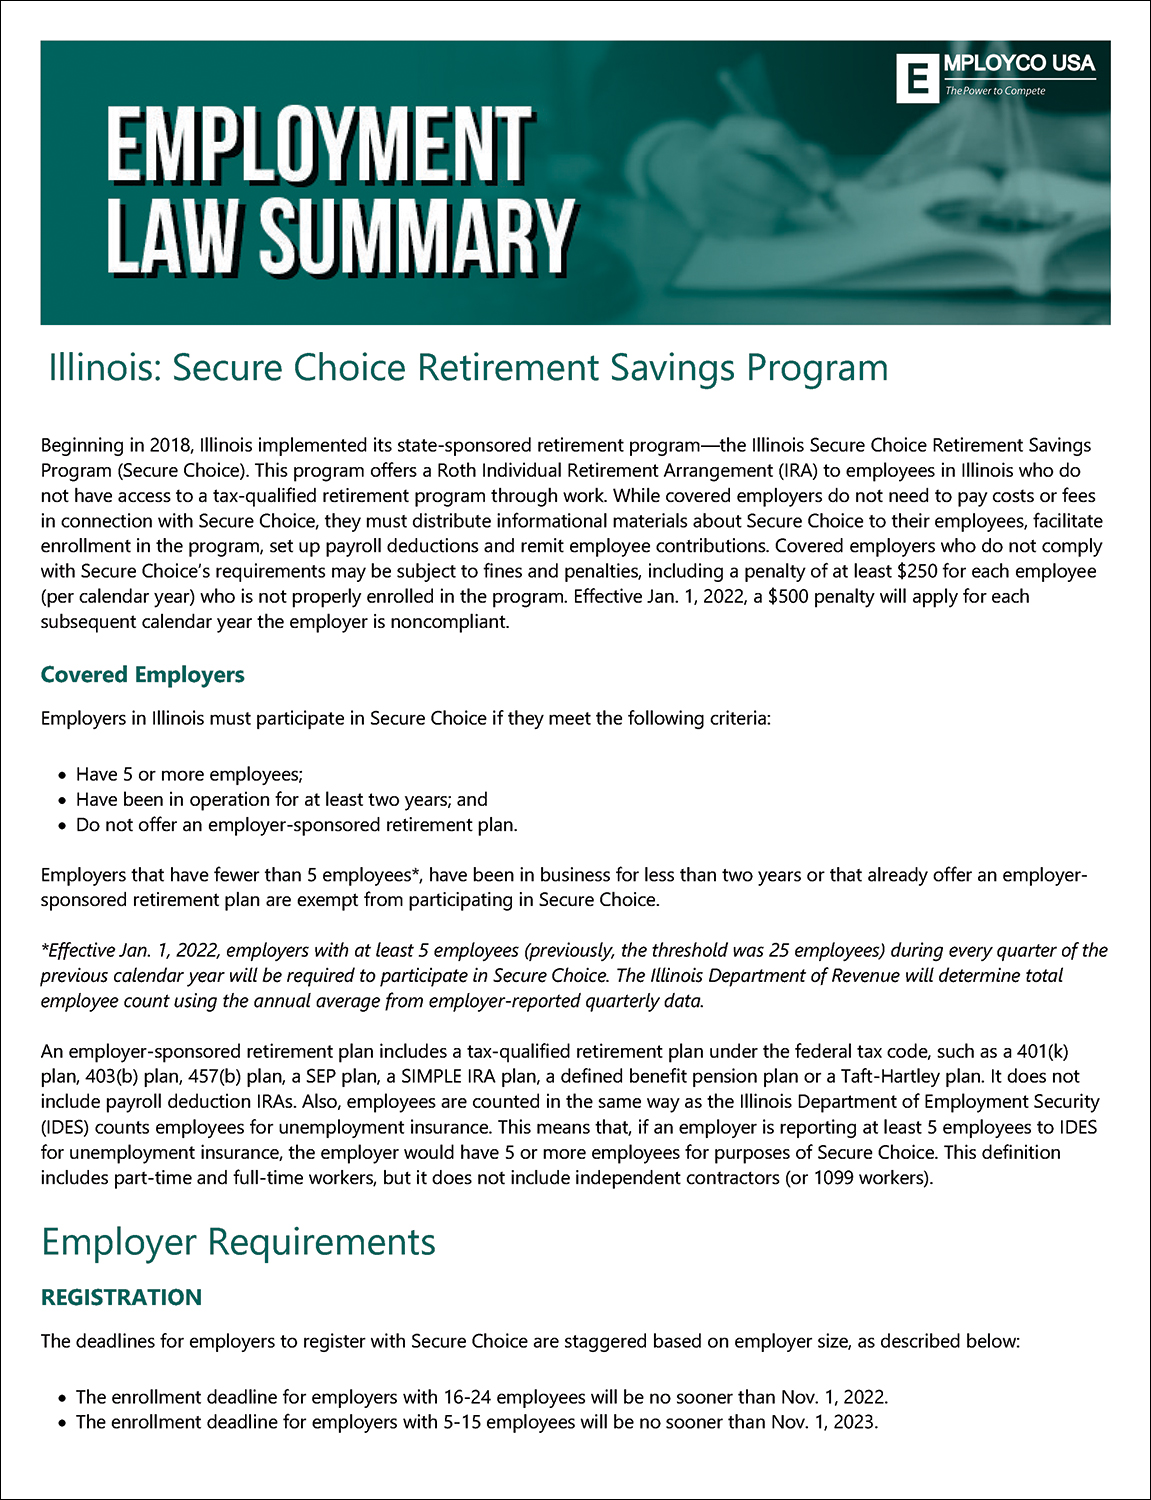 Employment Law Summary: Illinois Secure Choice Retirement Program